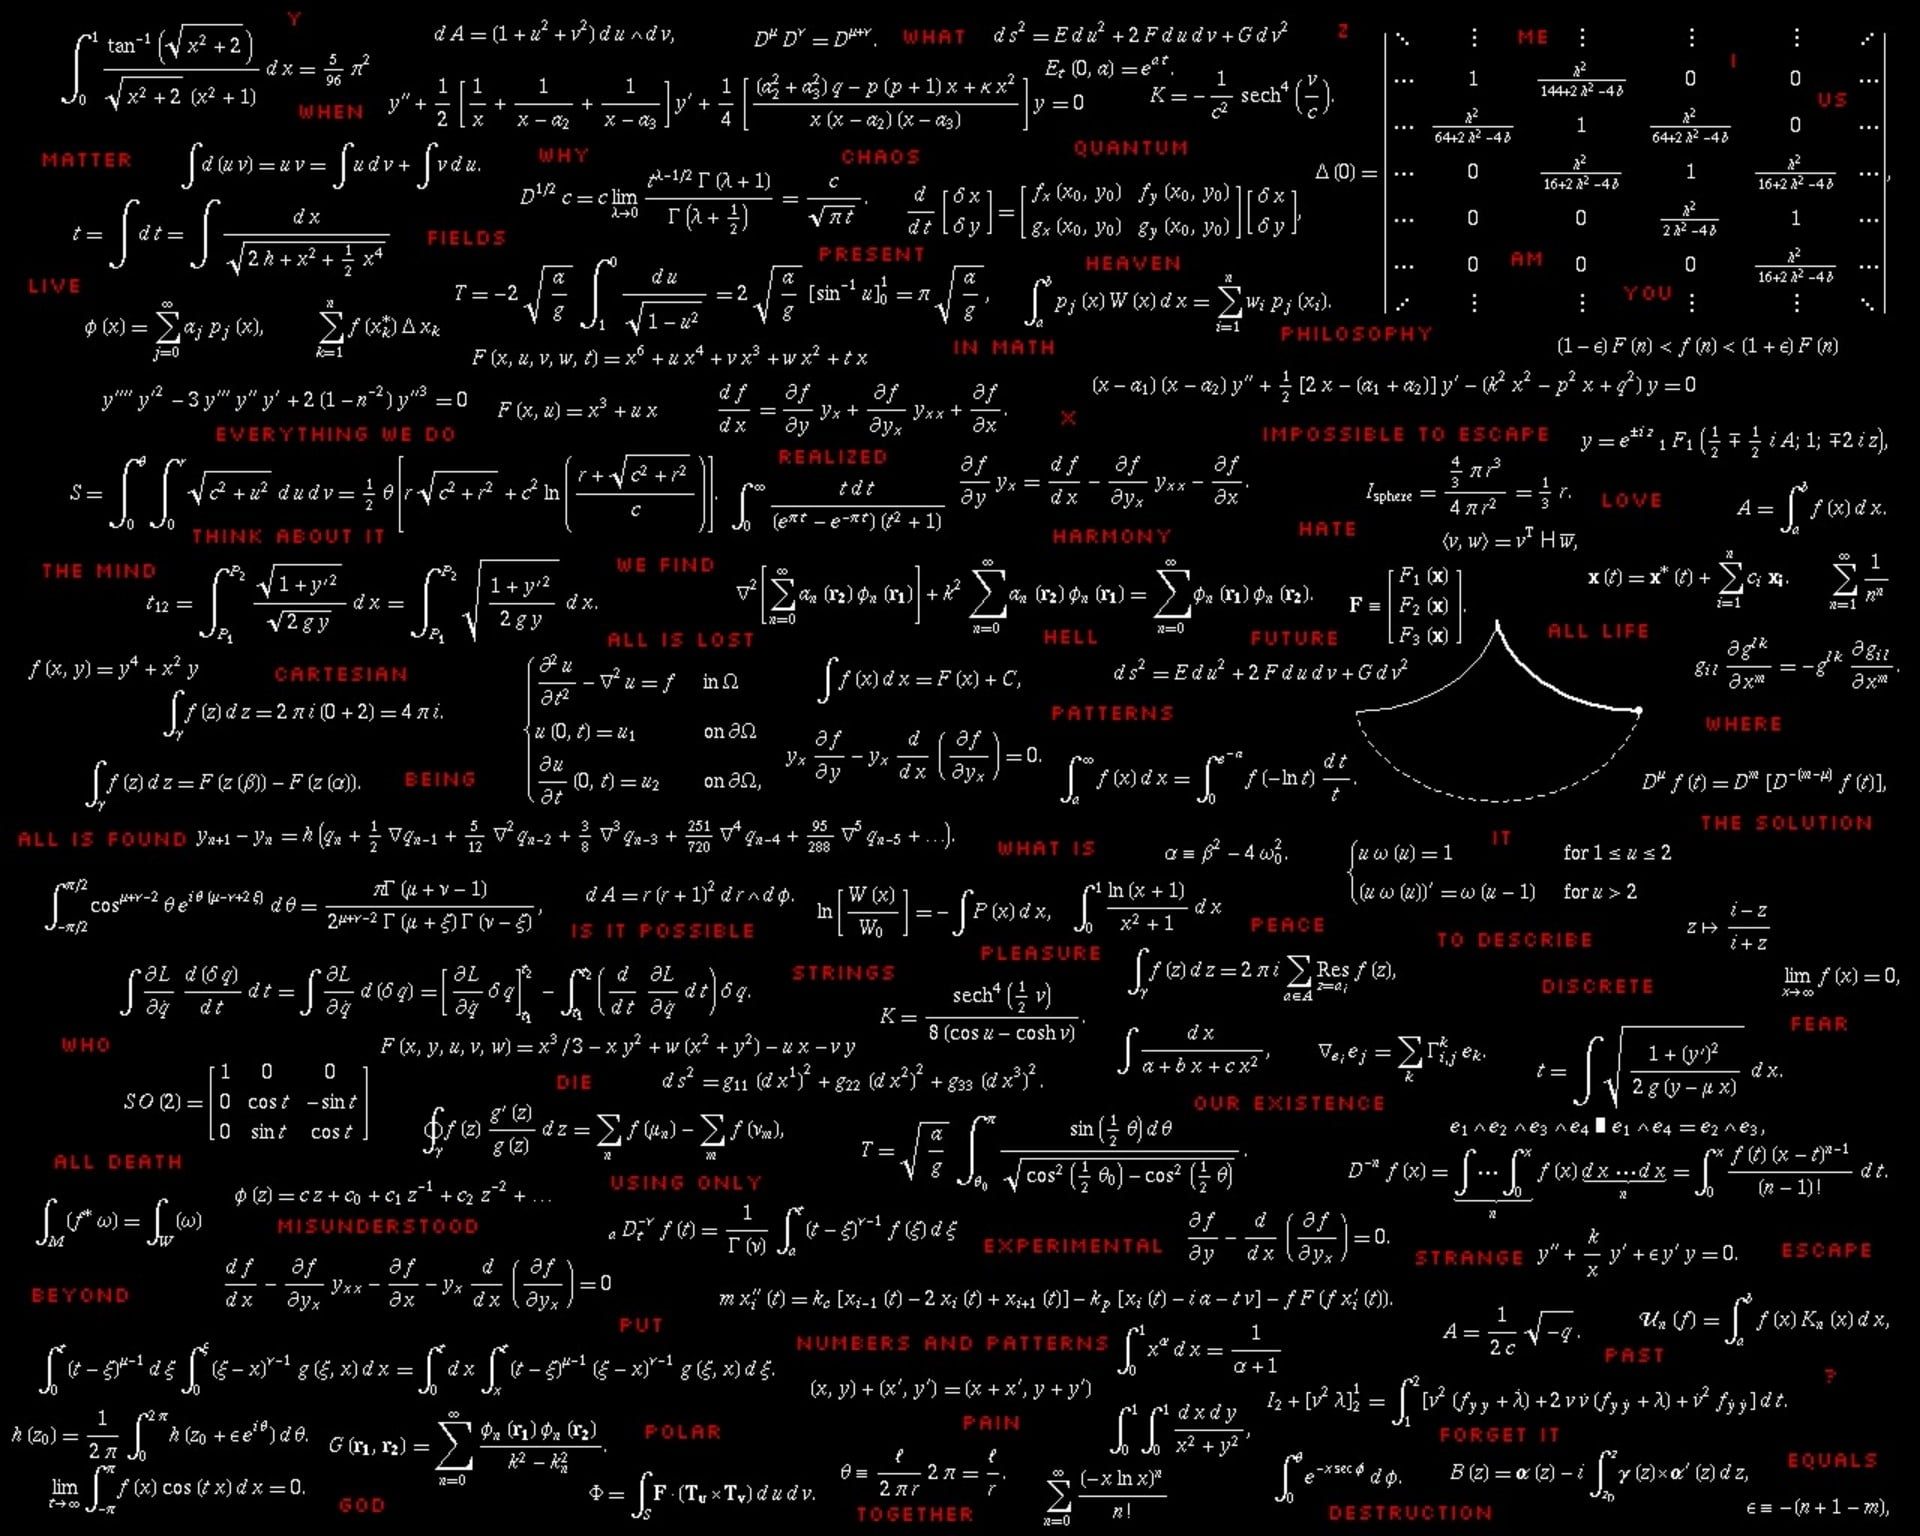 Wallpaper black background with text overlay, digital art, mathematics